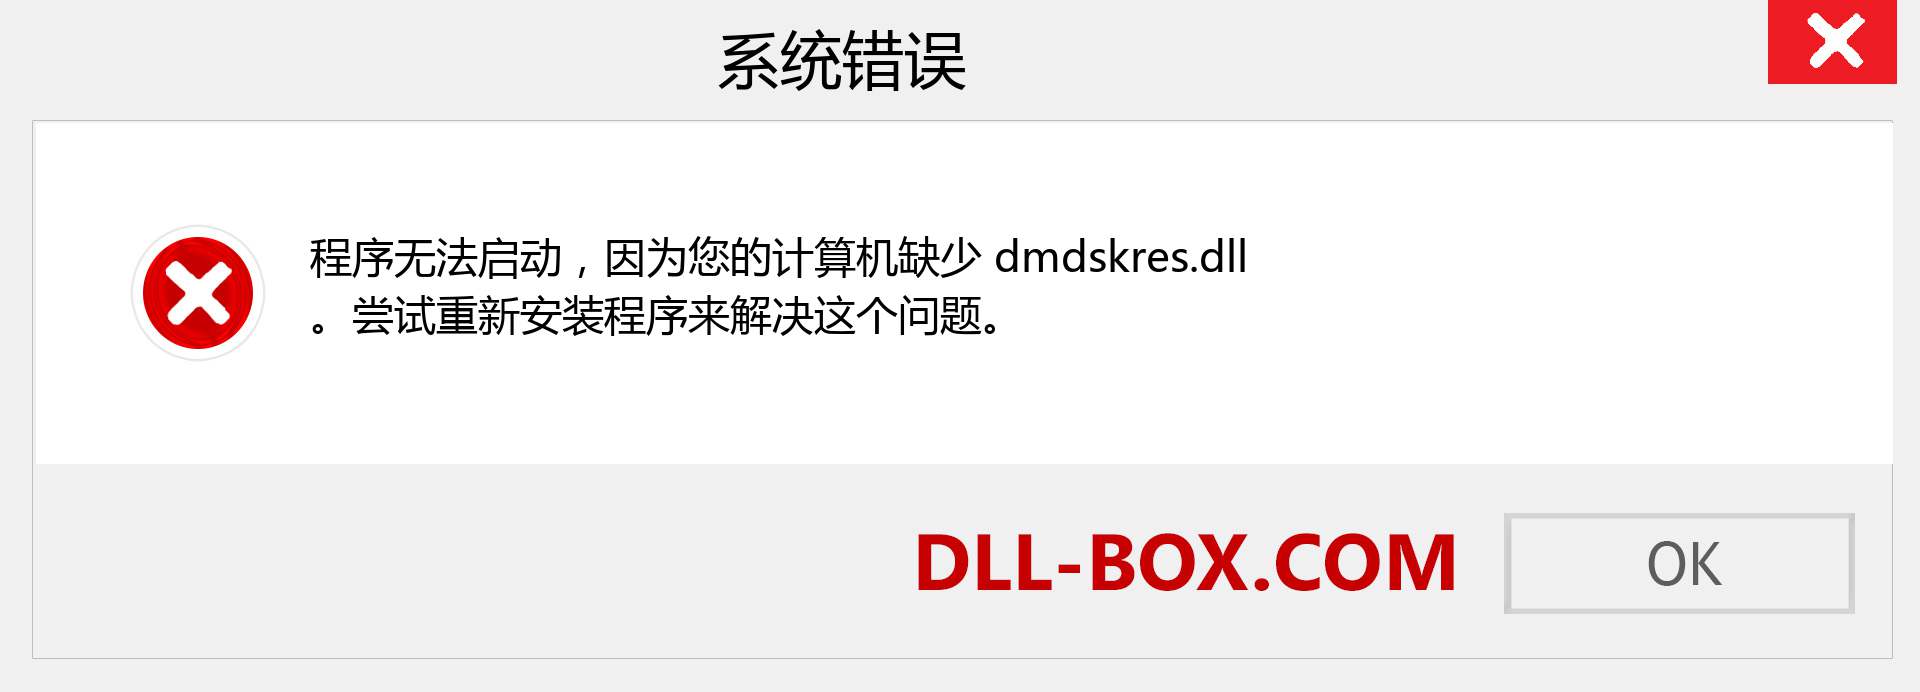 dmdskres.dll 文件丢失？。 适用于 Windows 7、8、10 的下载 - 修复 Windows、照片、图像上的 dmdskres dll 丢失错误